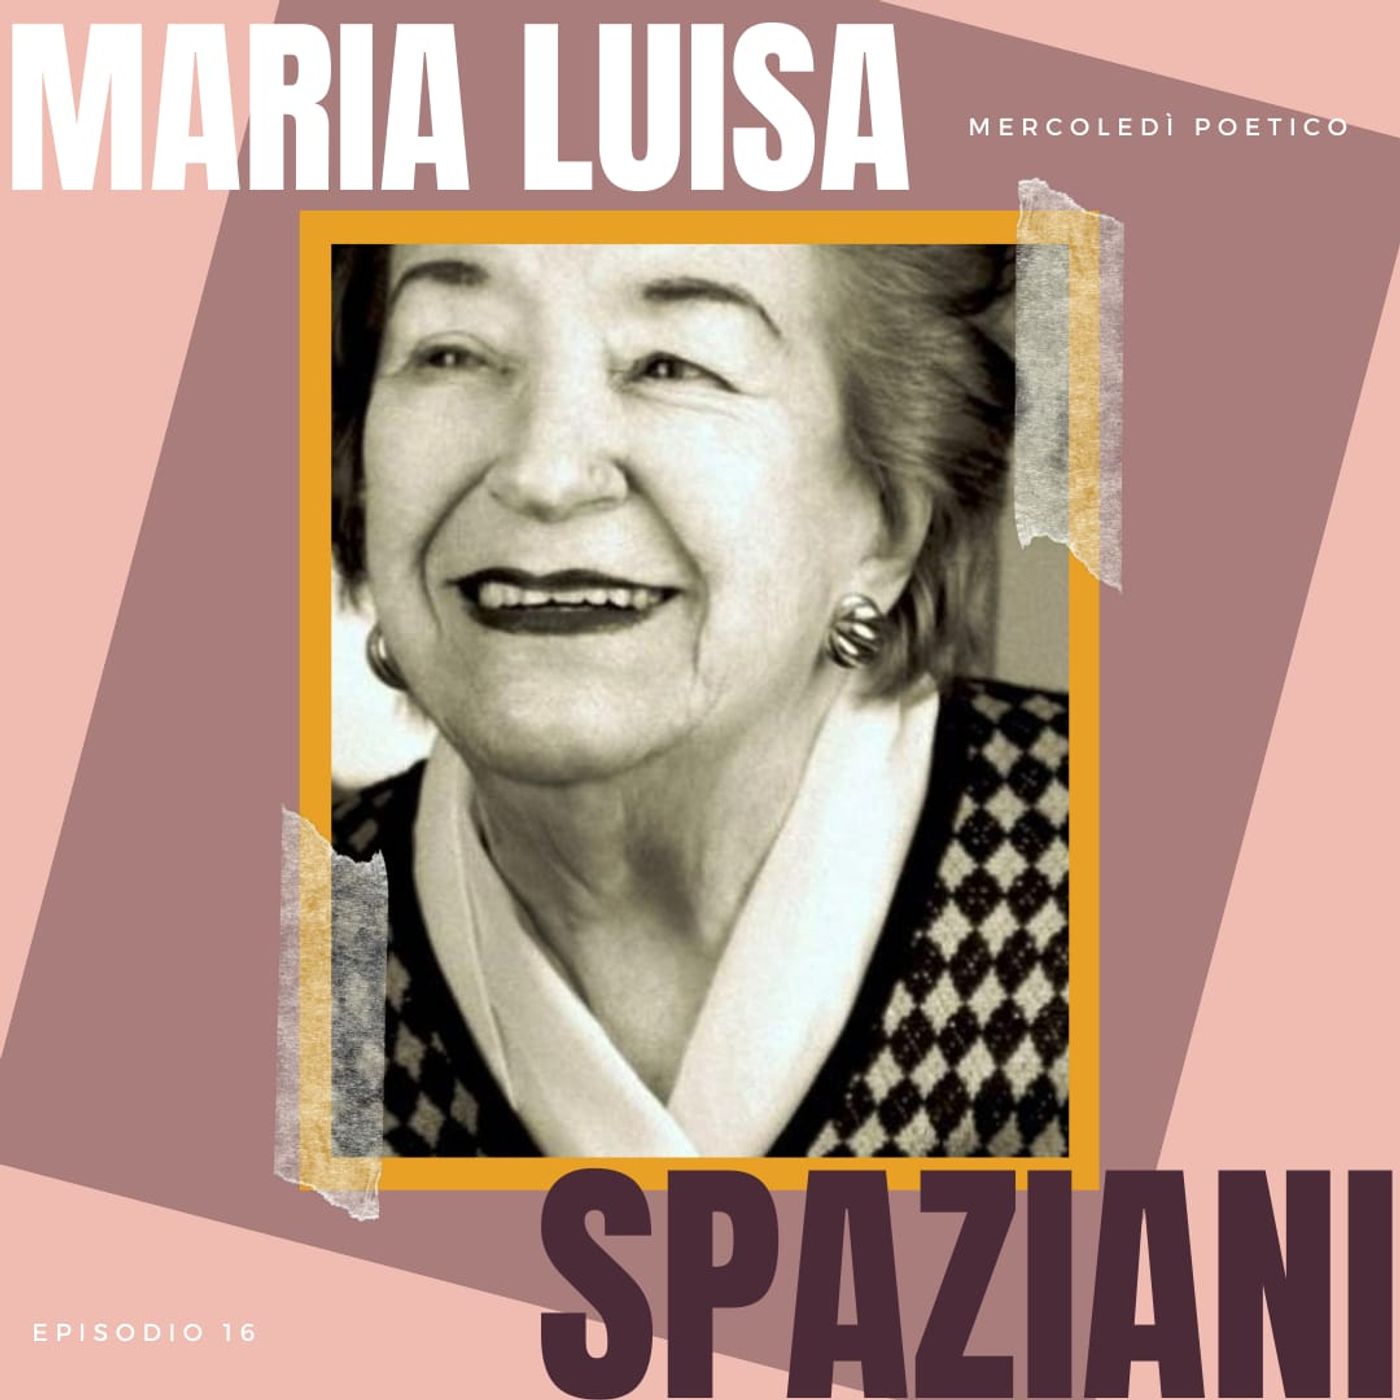 Mercoledì poetico - Ep. 16, Maria Luisa Spaziani